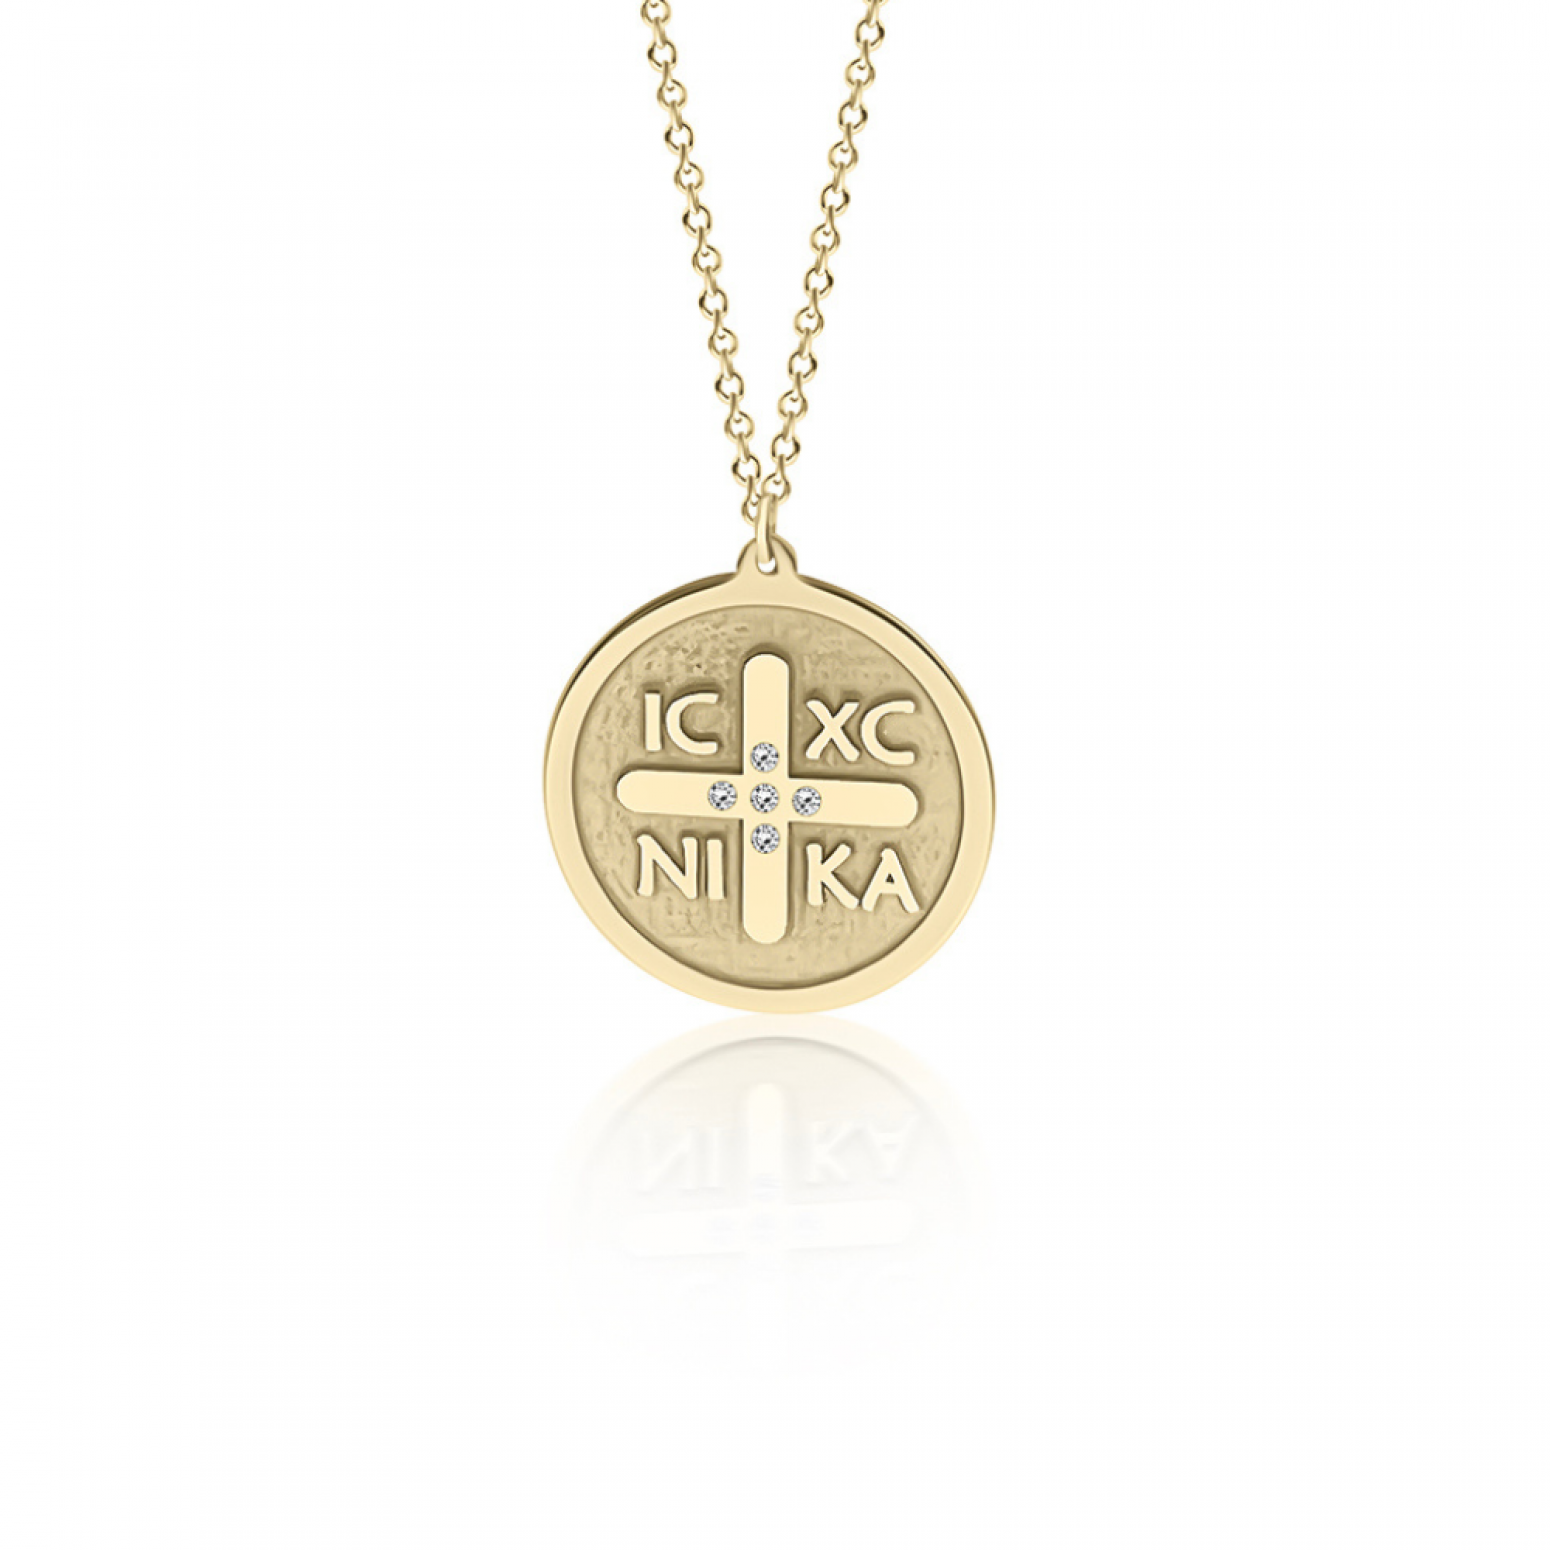 Byzantine necklace, Κ14 gold with diamonds 0.01ct, VS2, H, ko4710 NECKLACES Κοσμηματα - chrilia.gr